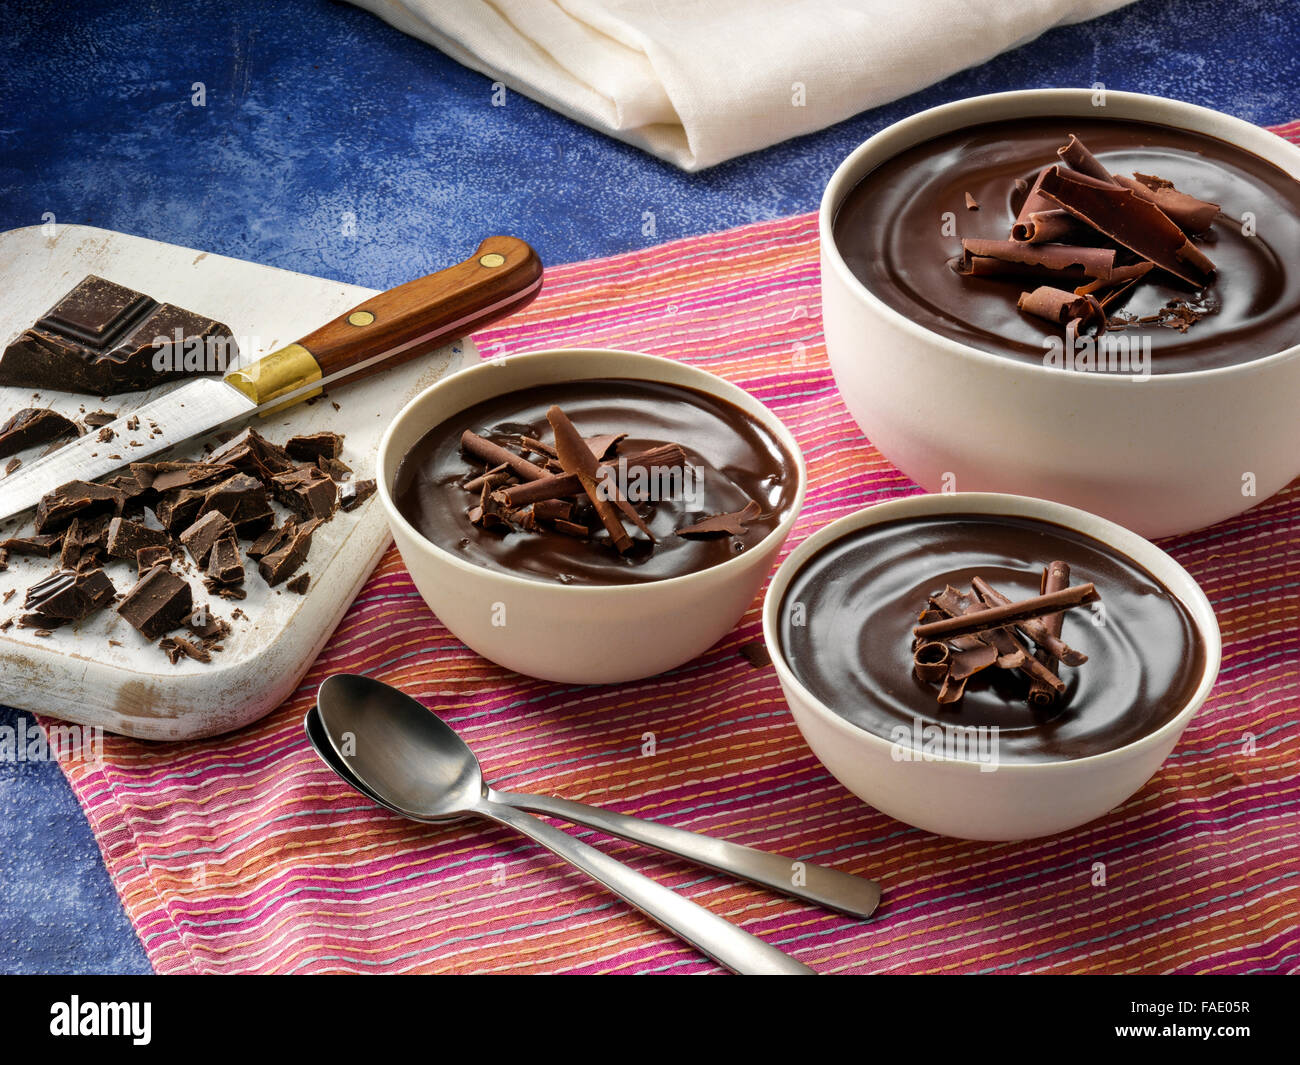 Chocolate pudding Stock Photo